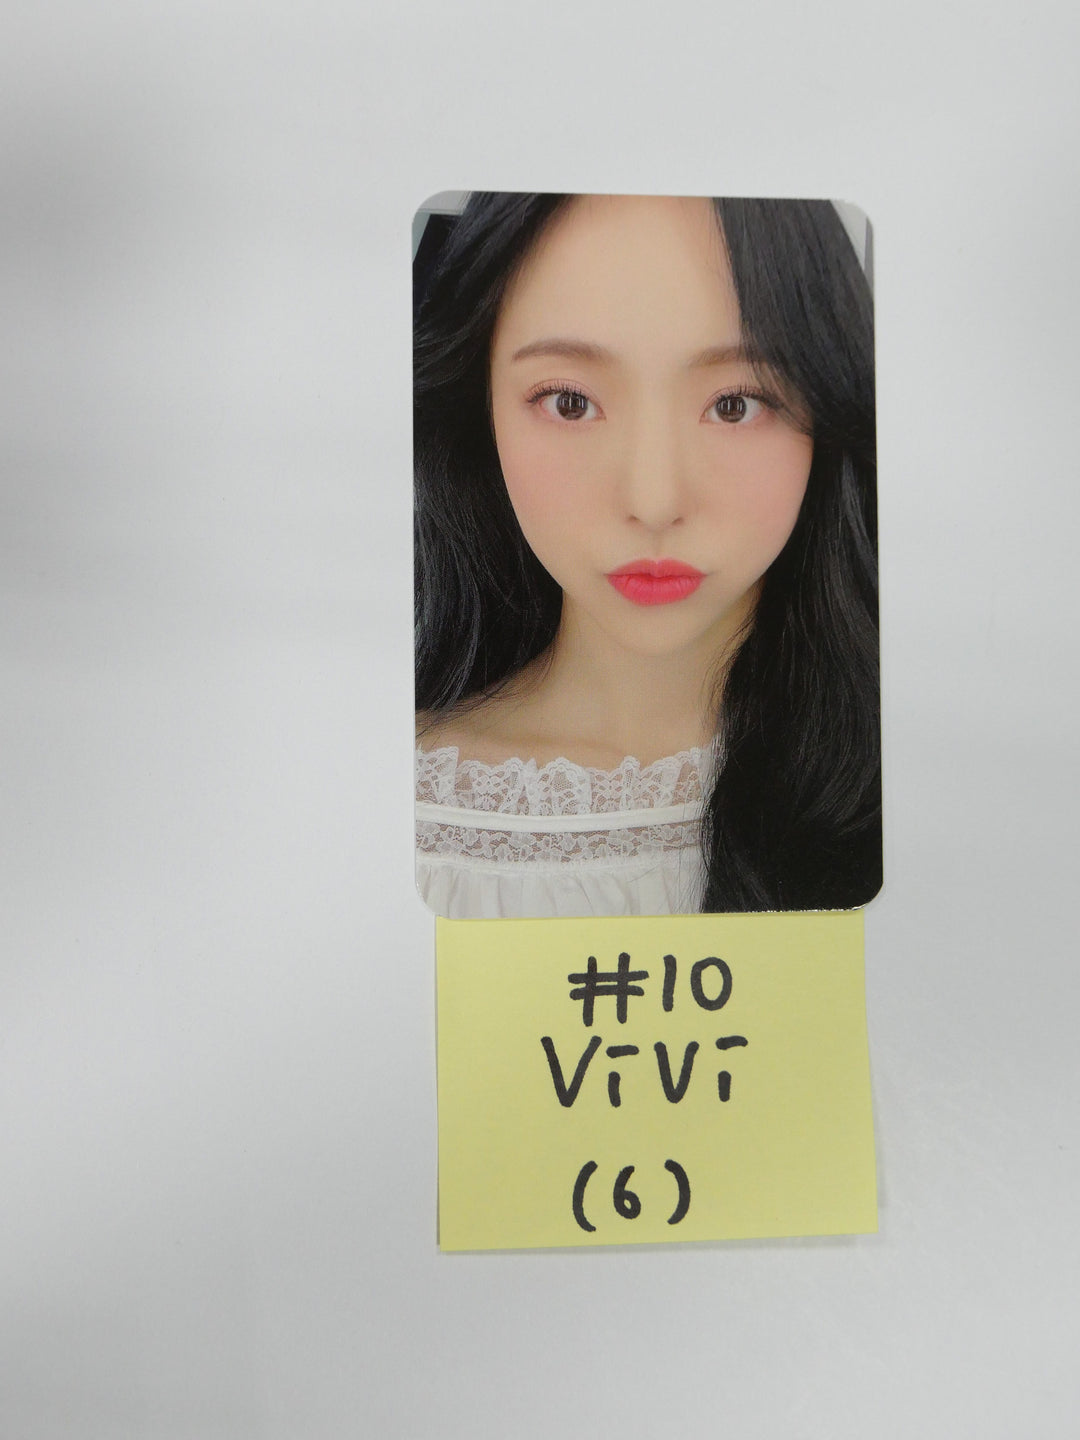 Loona '&' - Official Photocard (Yeojin, ViVi, Kim Lip) (Mass Updated 9-2)